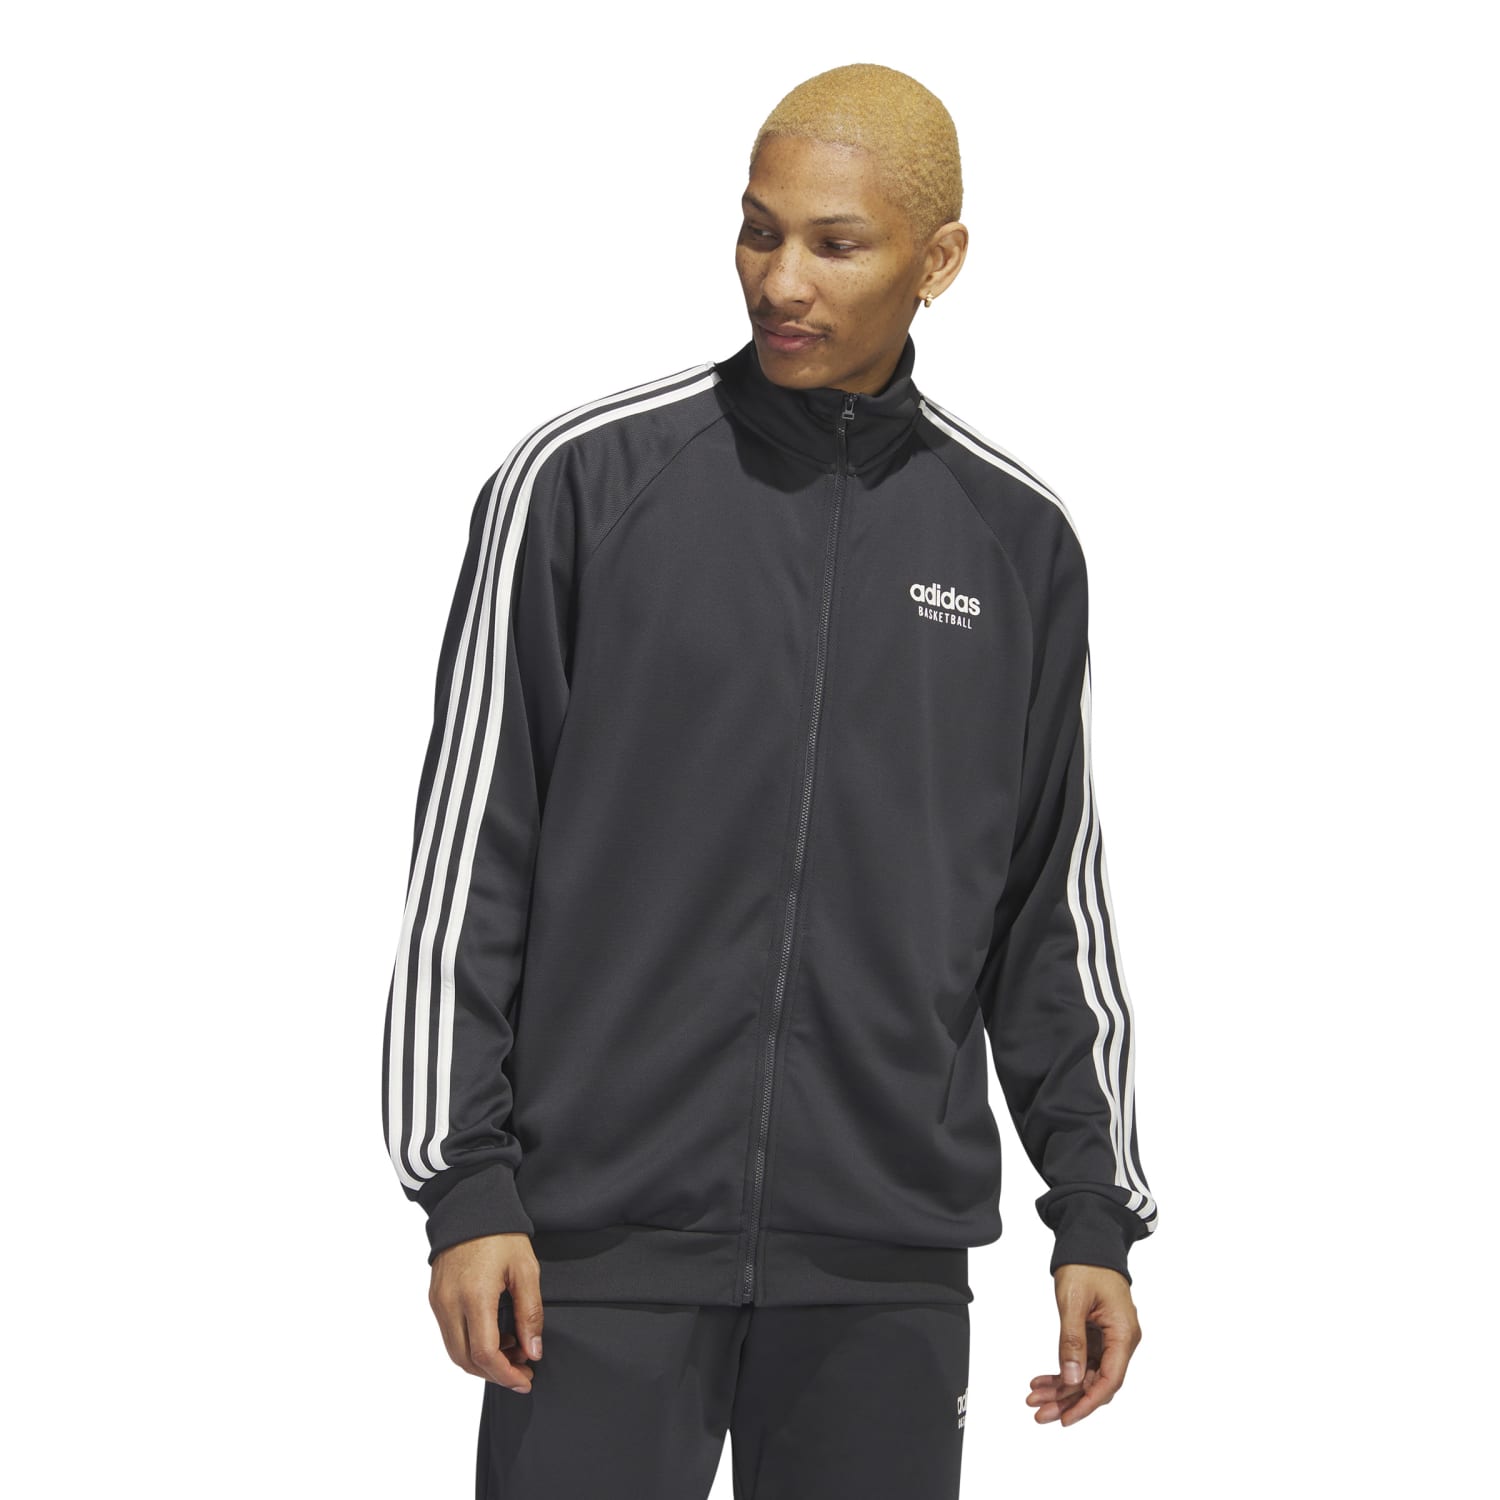 adidas basketball men select jacket grey il2189 274